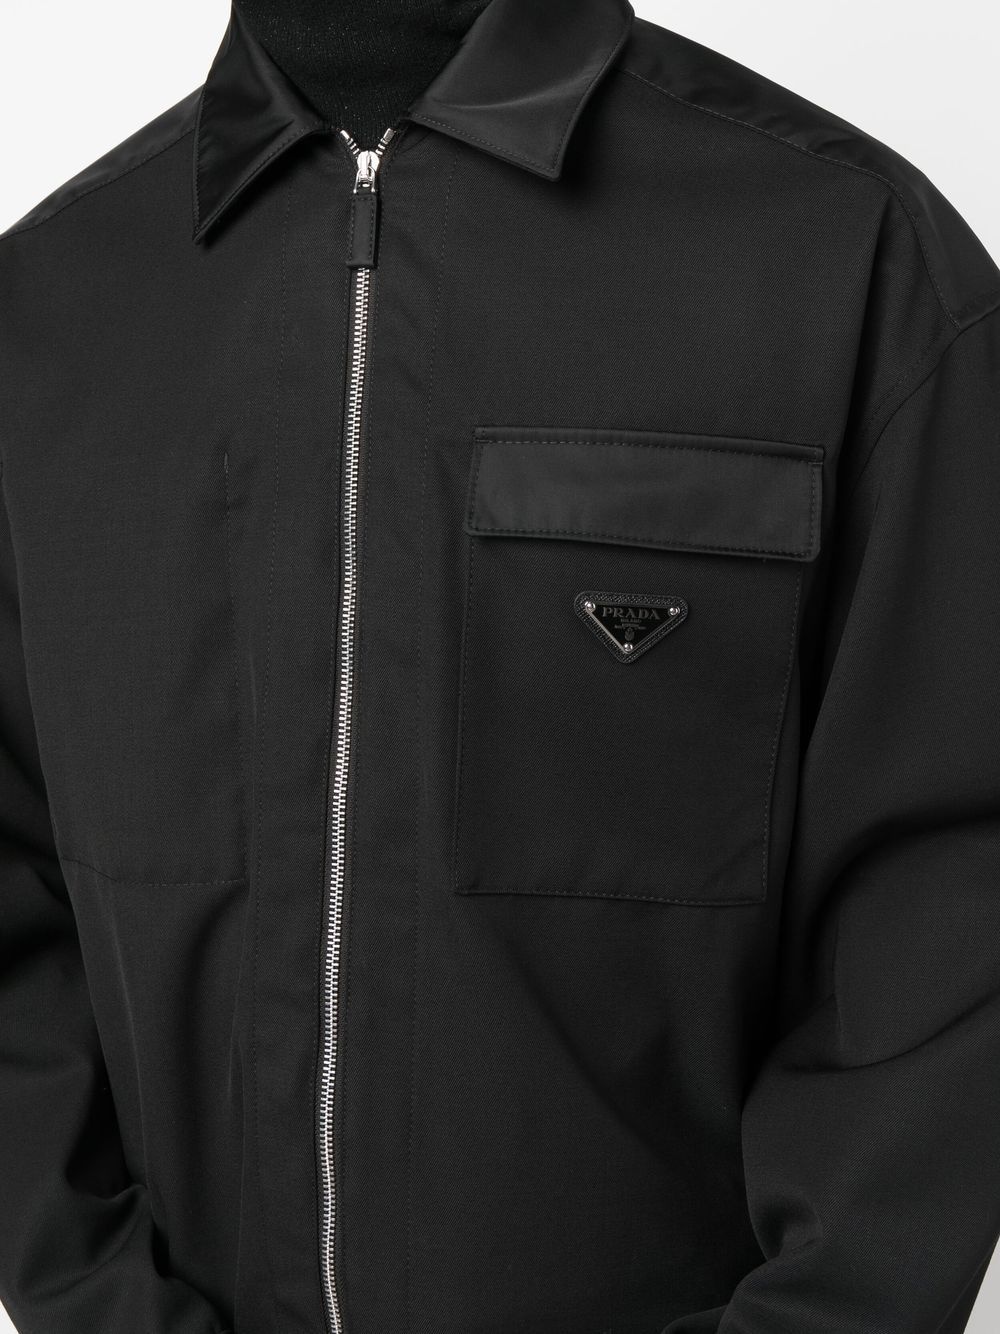 Prada Recycled Nylon Press-Stud Jacket - Black